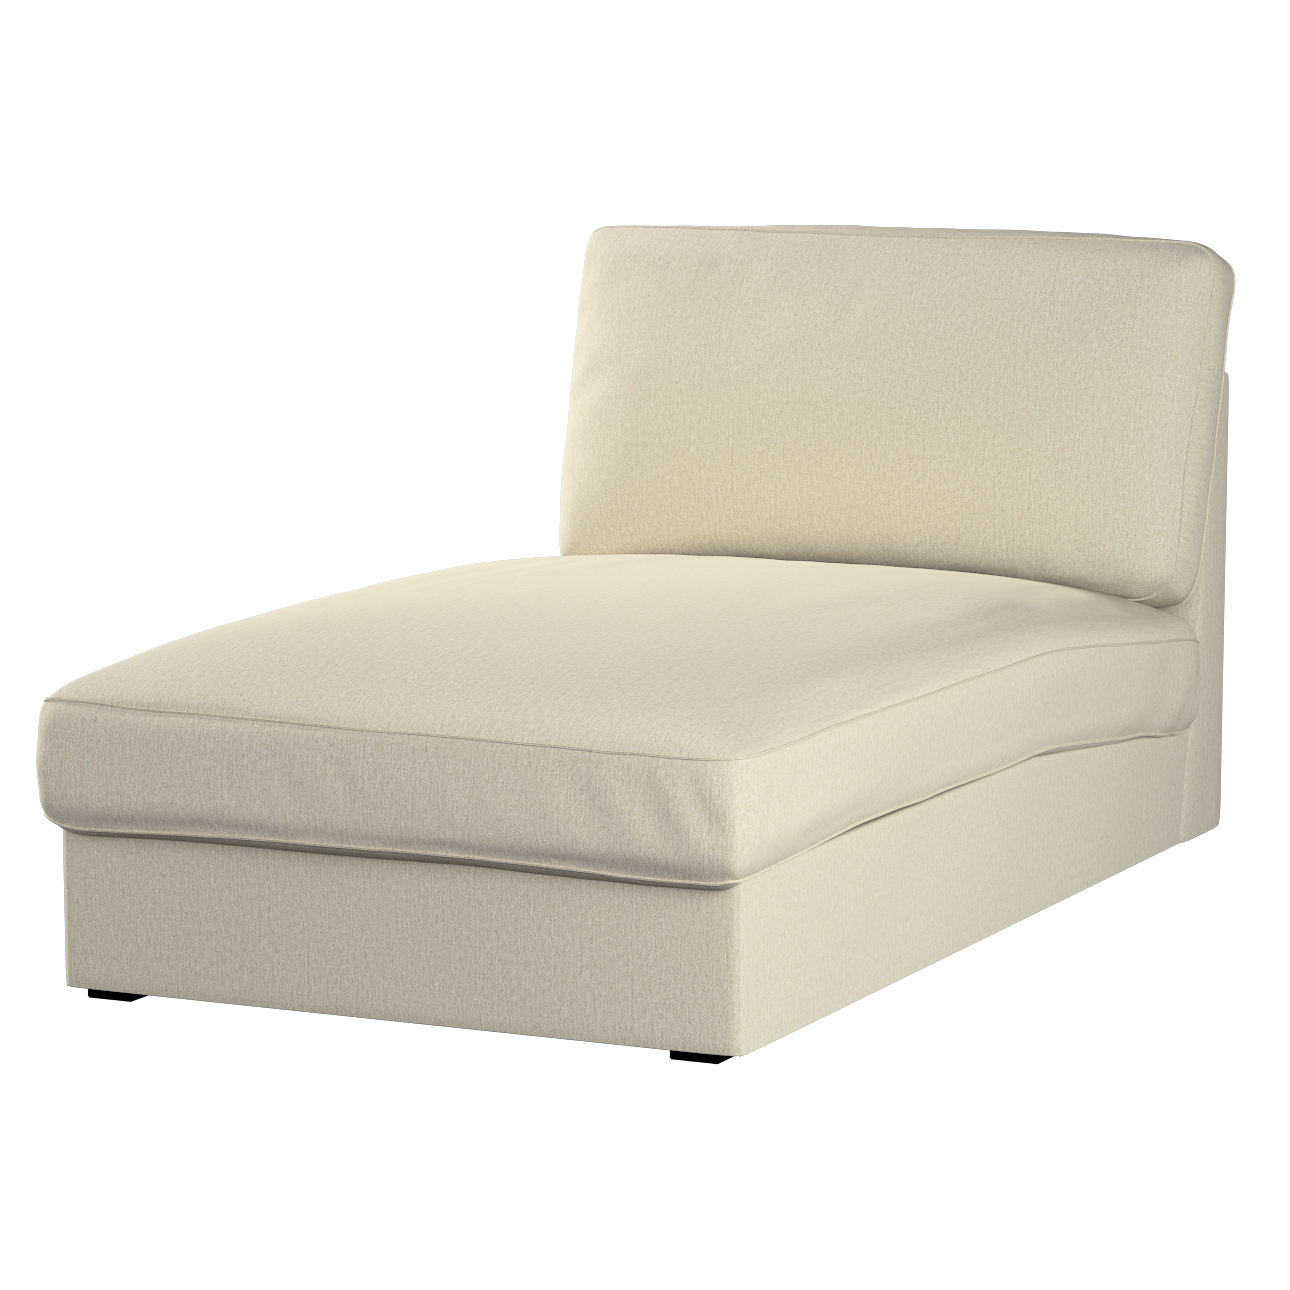 Bezug für Kivik Recamiere Sofa, beige-grau, Bezug für Kivik Recamiere, Madr günstig online kaufen